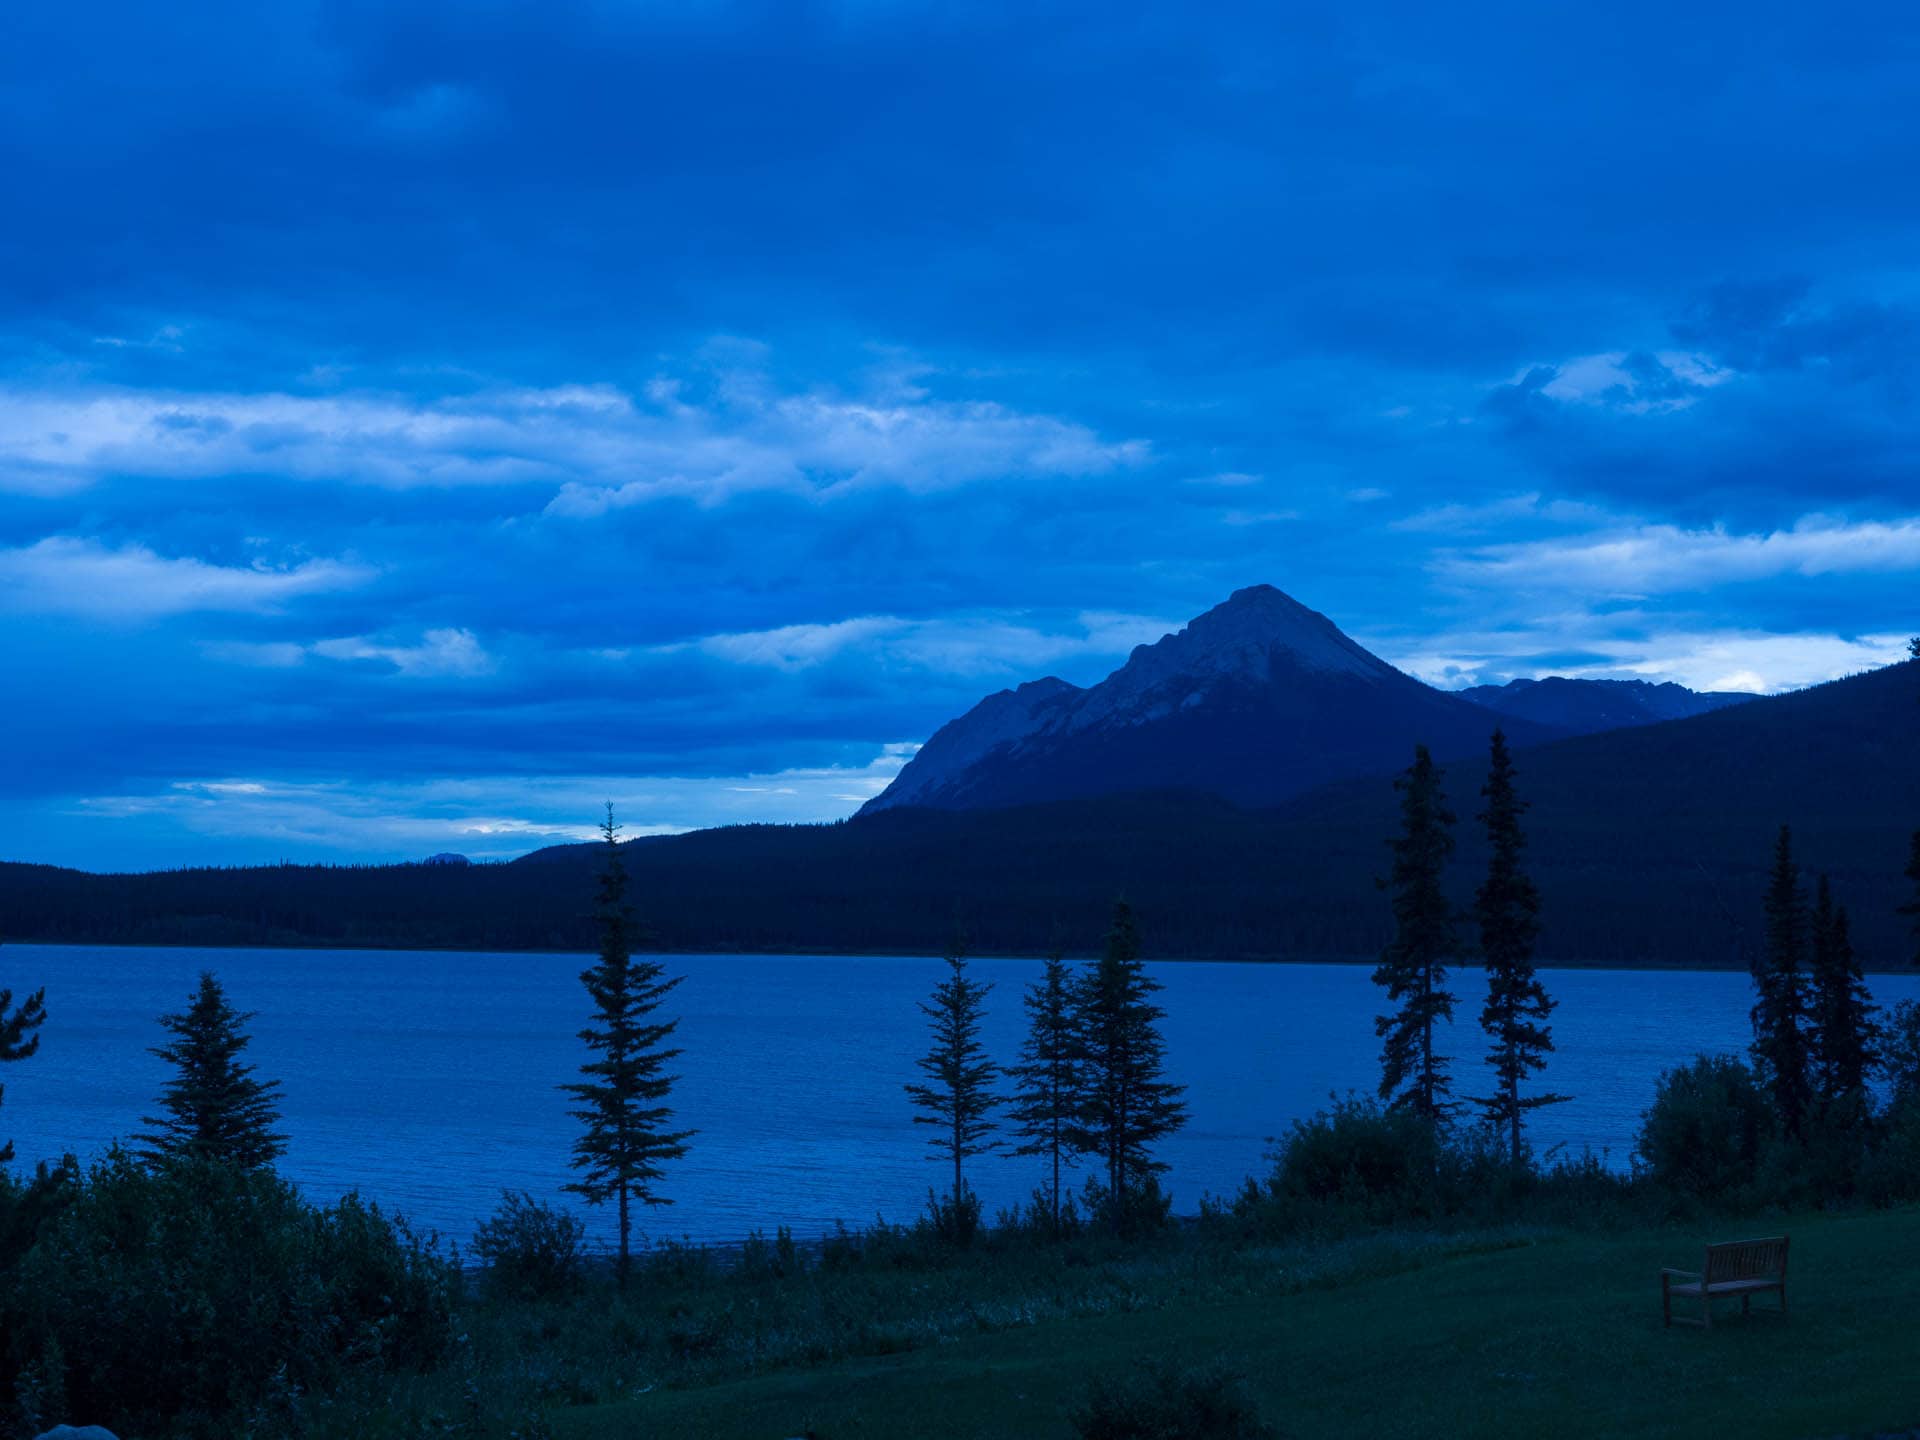 Southern Lakes Resort, Tagish Lake, Yukon, 9:38 pm on the longest day of the year, June 21, 2019